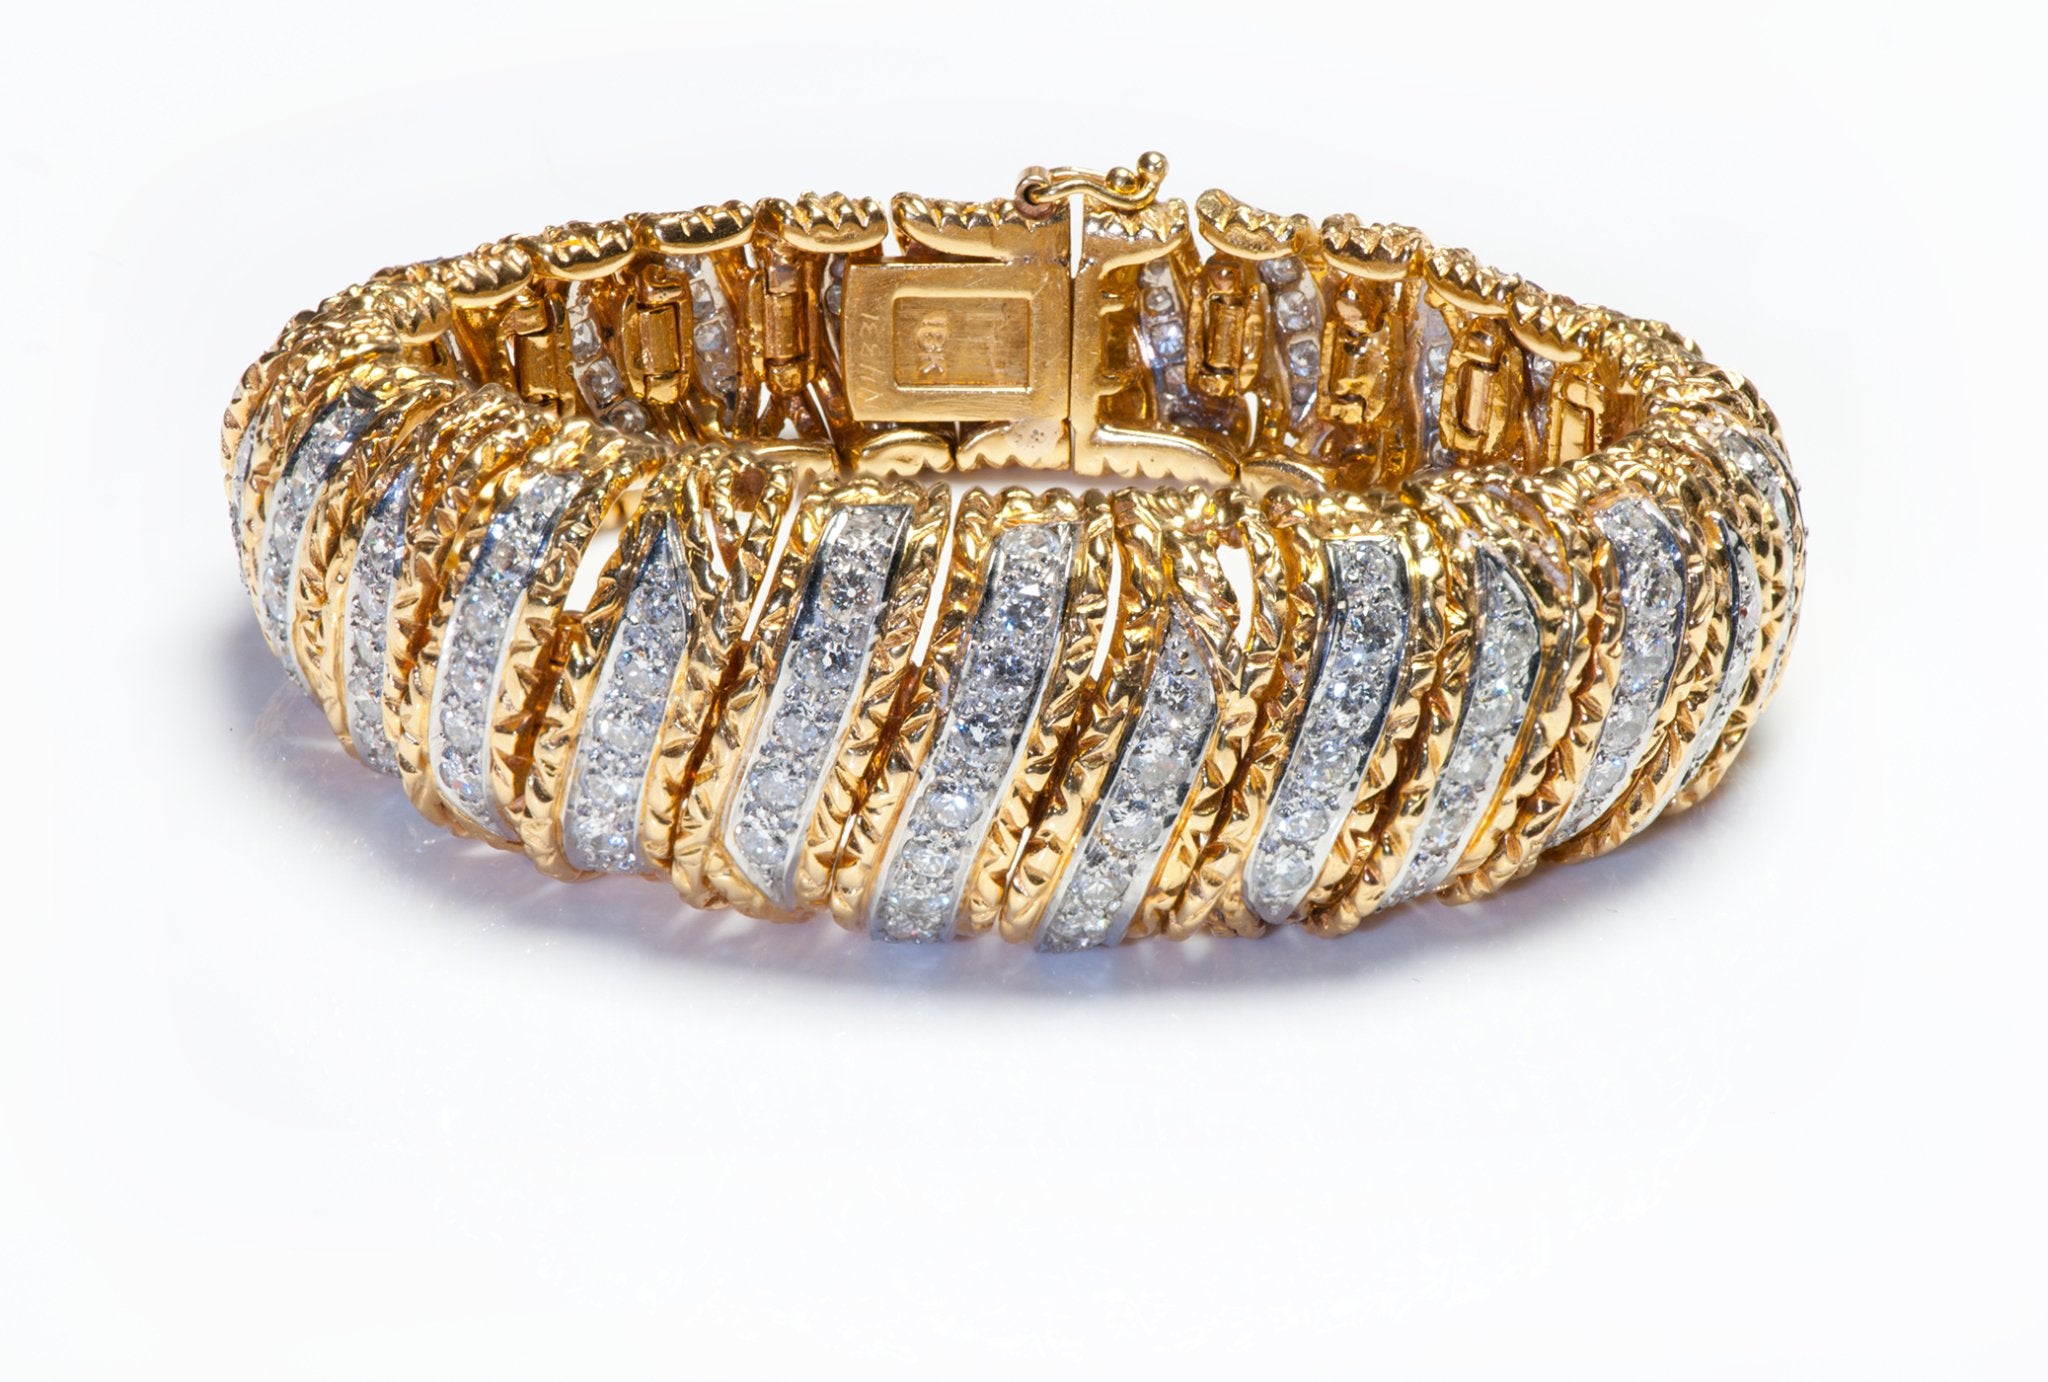 Exquisite Vintage 18K Yellow Gold Diamond Bracelet